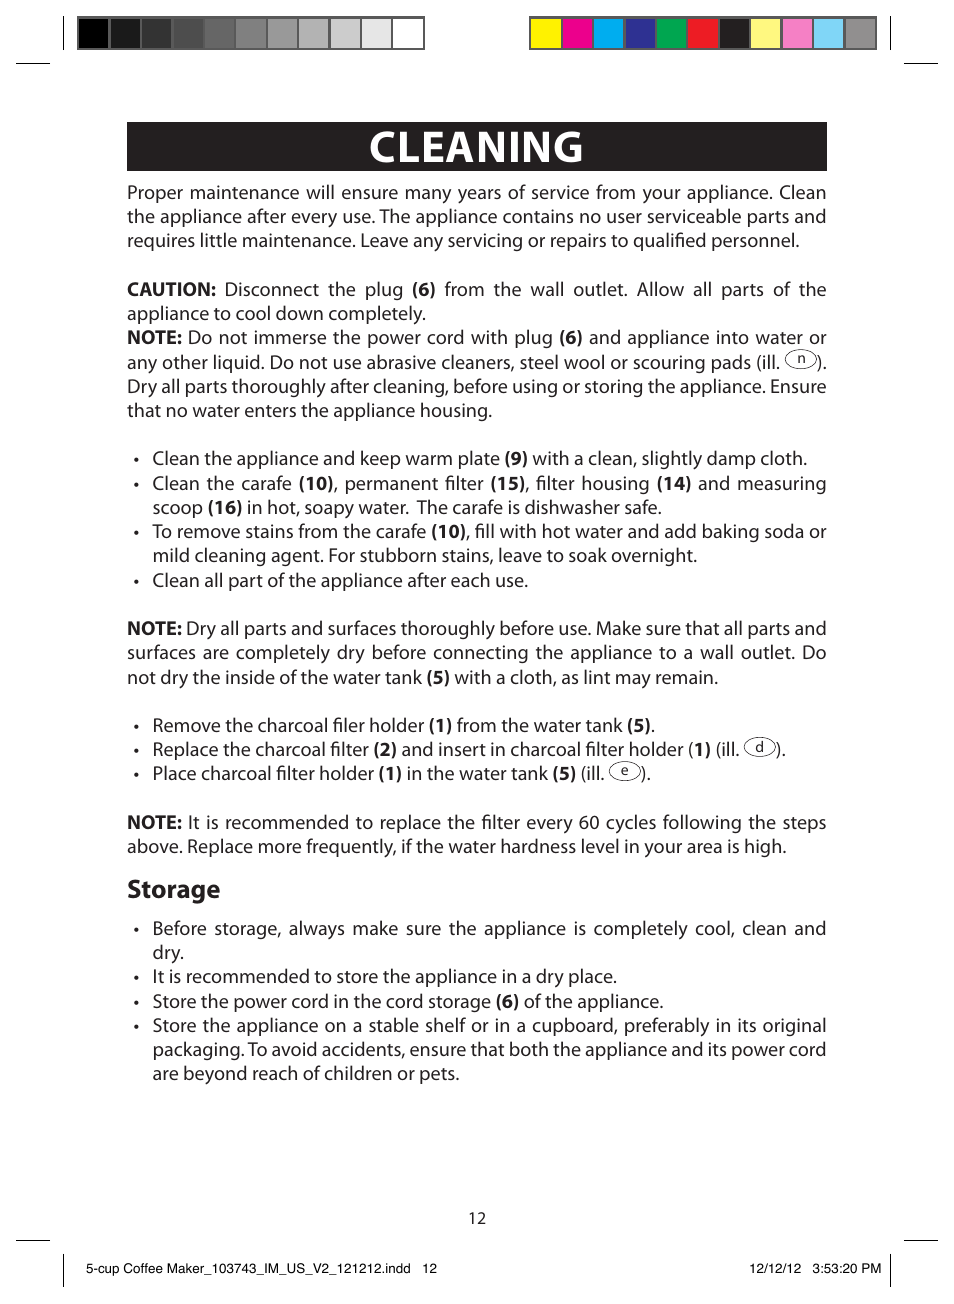 Cleaning, Storage | FARBERWARE 103743 5 Cup Coffee Maker User Manual ...